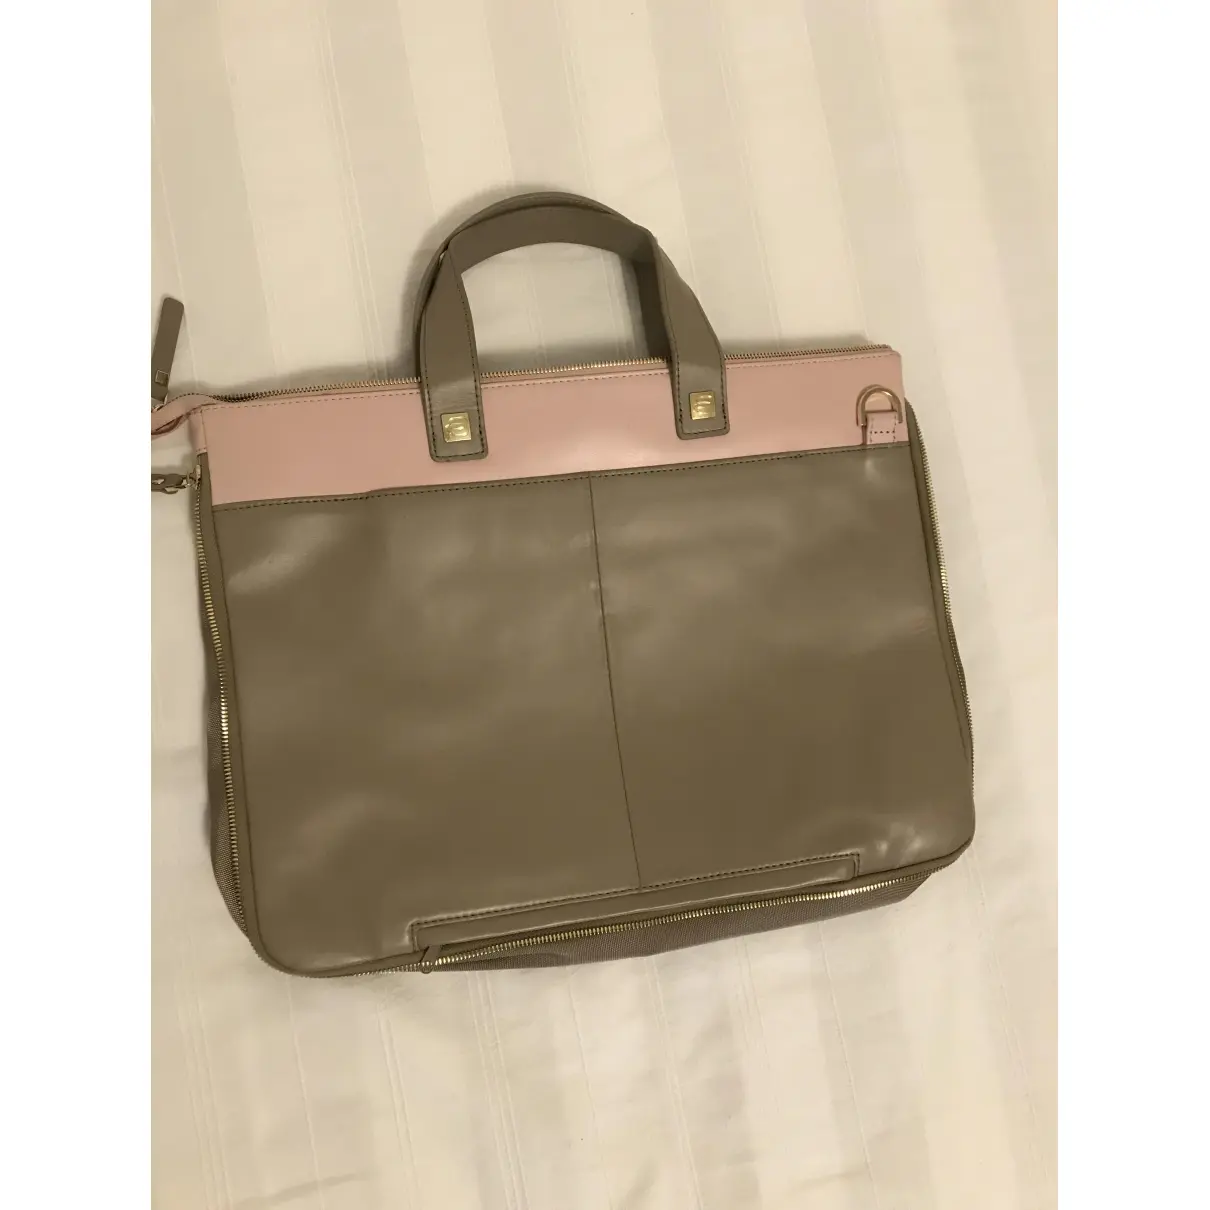 Buy Piquadro Leather handbag online